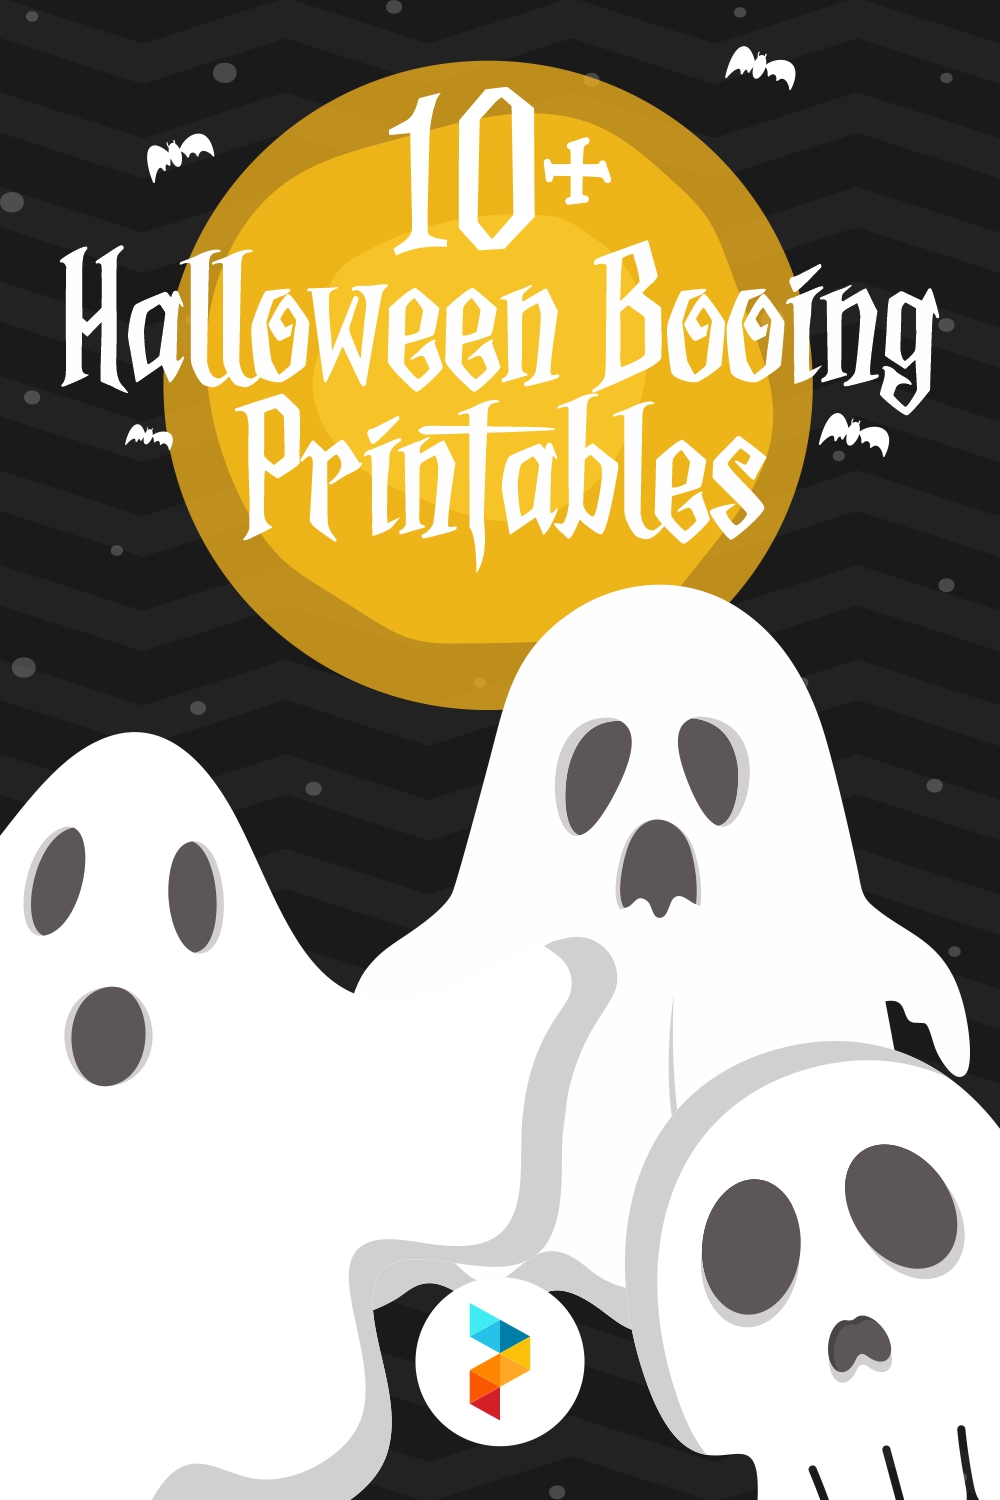 Halloween Booing Printables